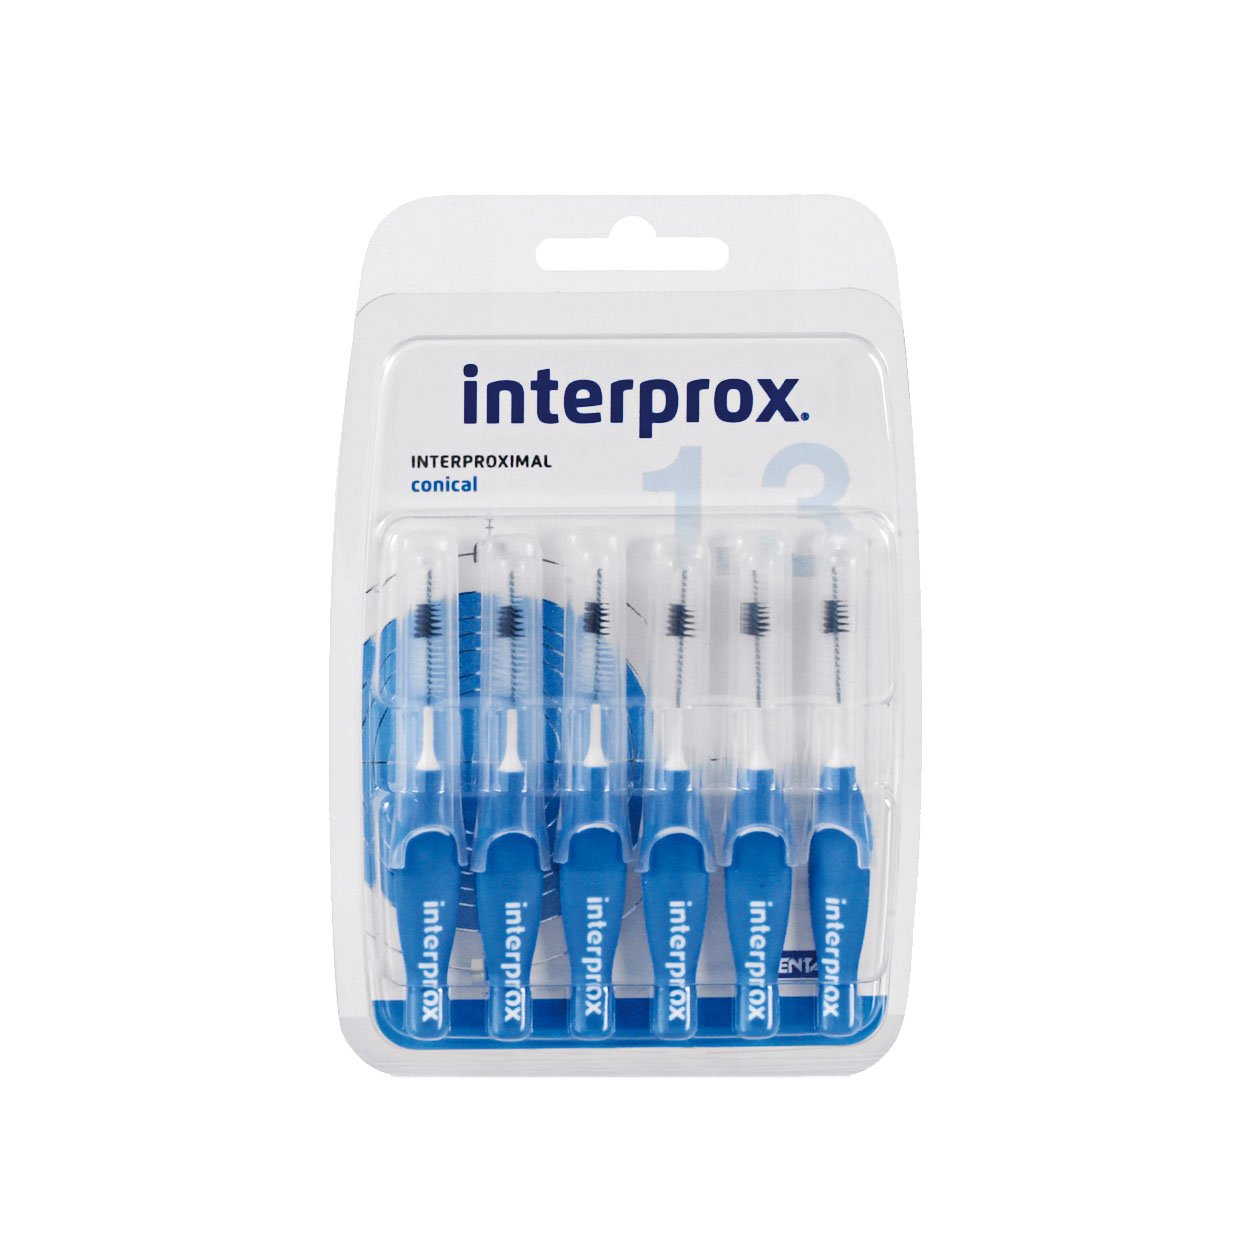 Interprox Interdentalbürsten blau conical 6 Stück, 6er Pack (6x 6 Stück)